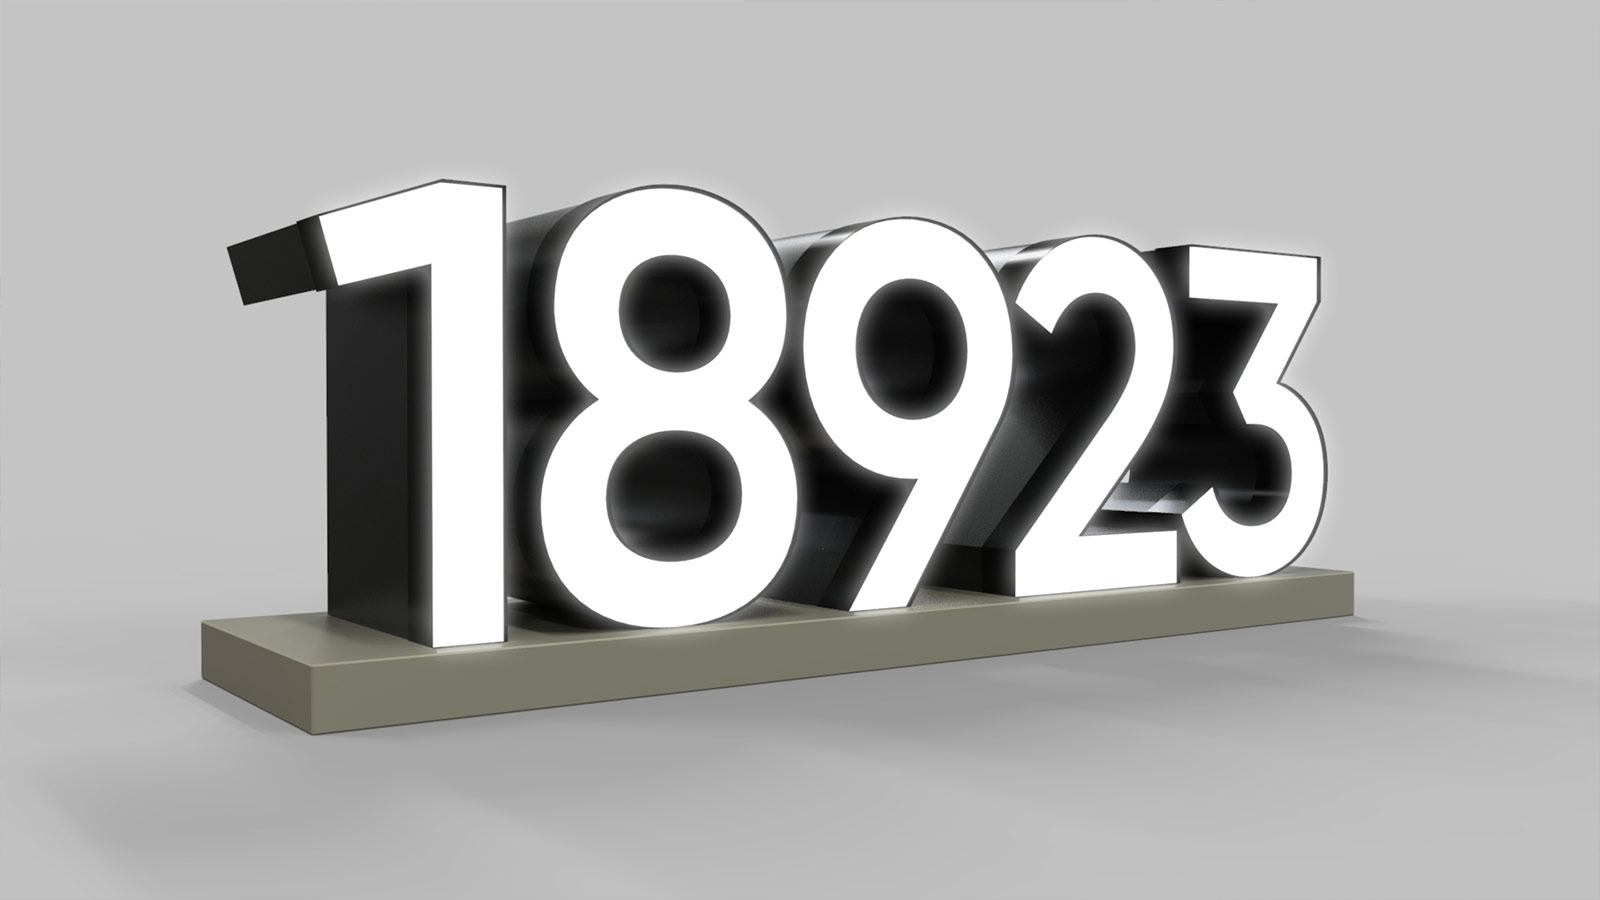 18923 illuminated numbers 3d rendering